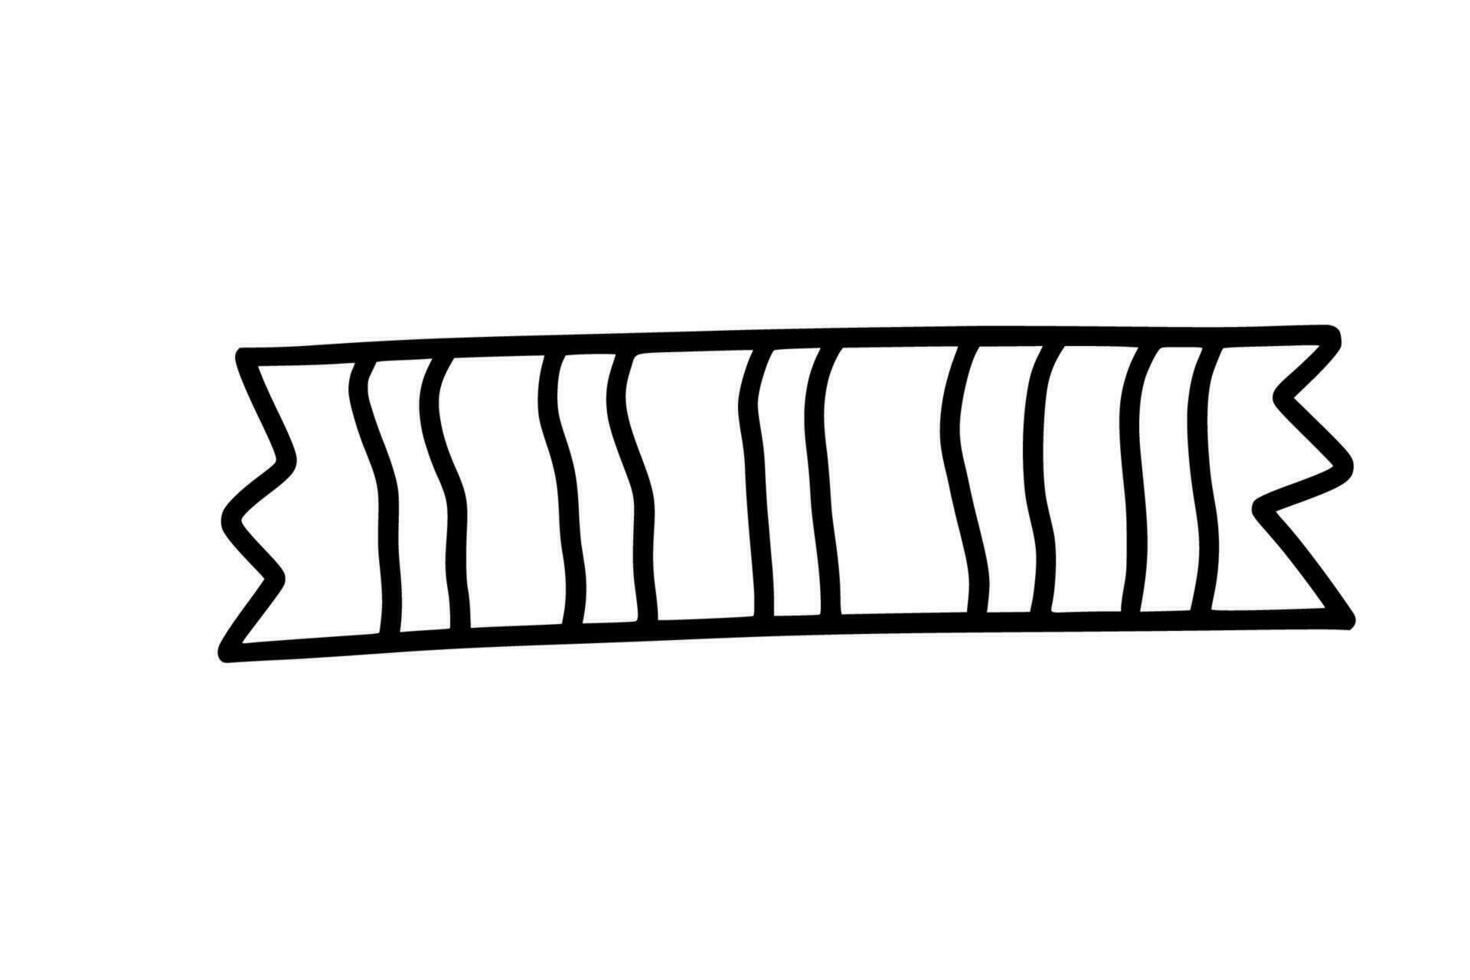 washi tape doodle illustration vector